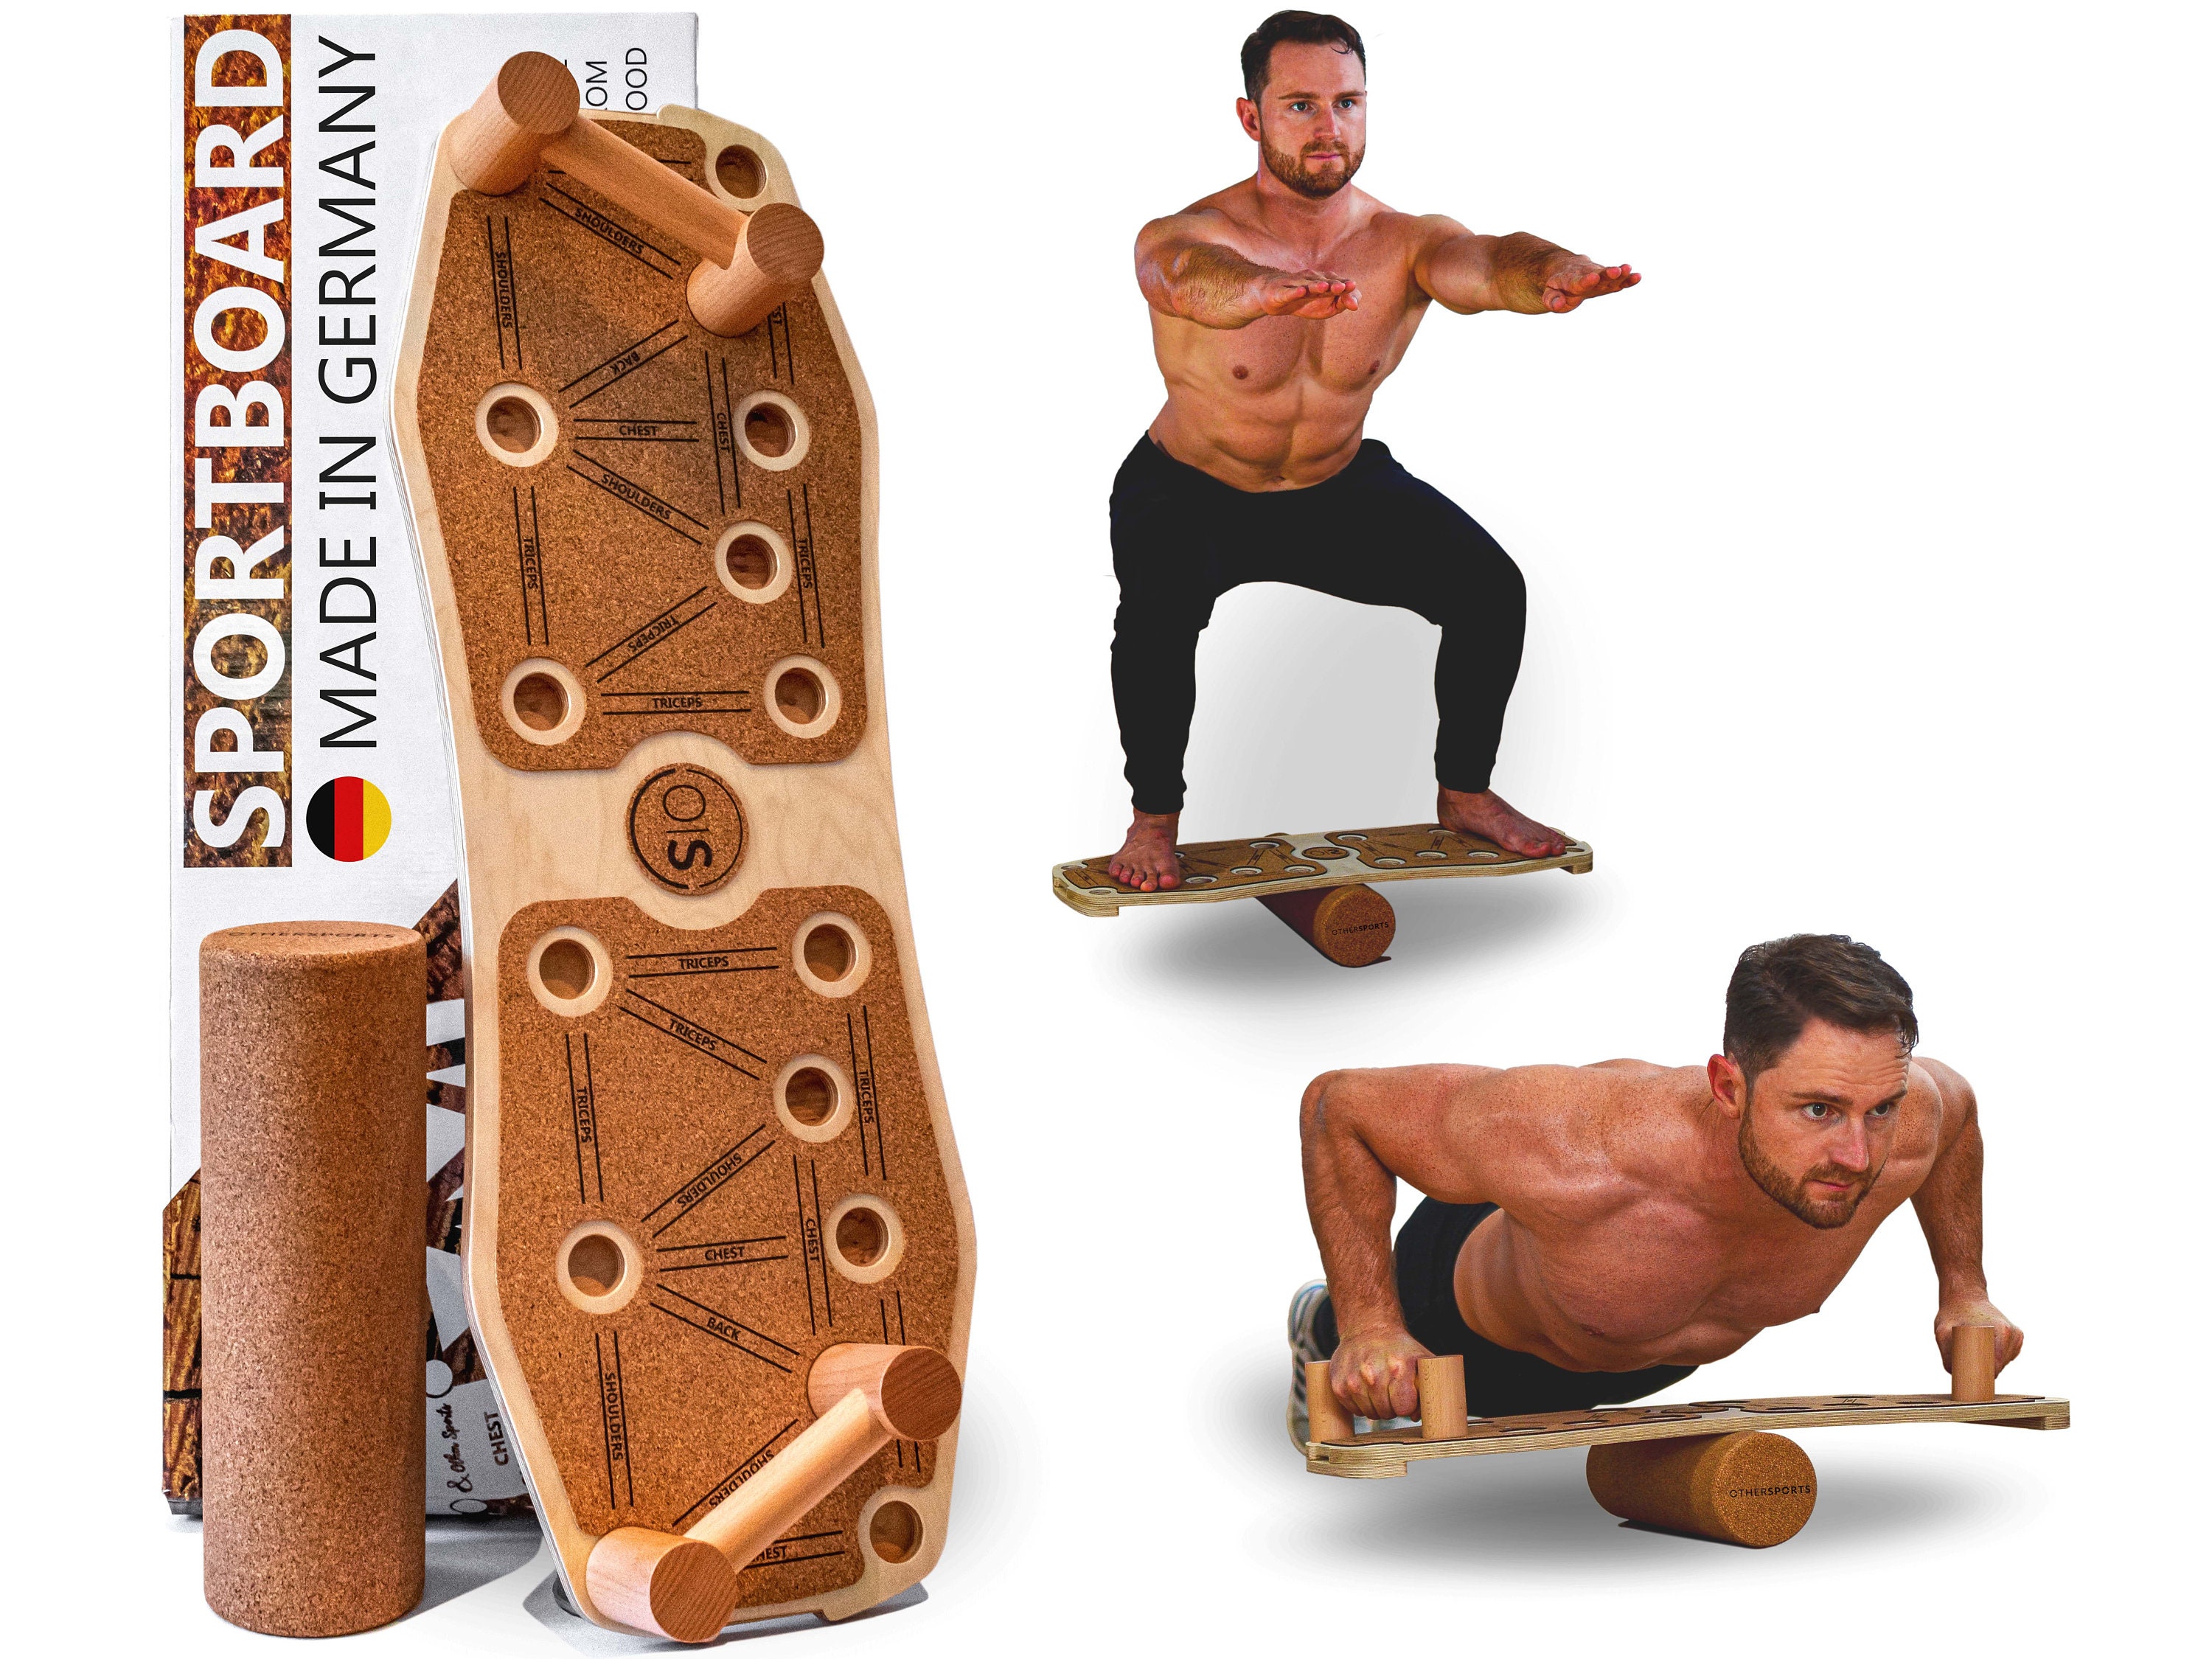 SPORTBOARD Handmade Fitness Equipment Made of 100% Real Wood